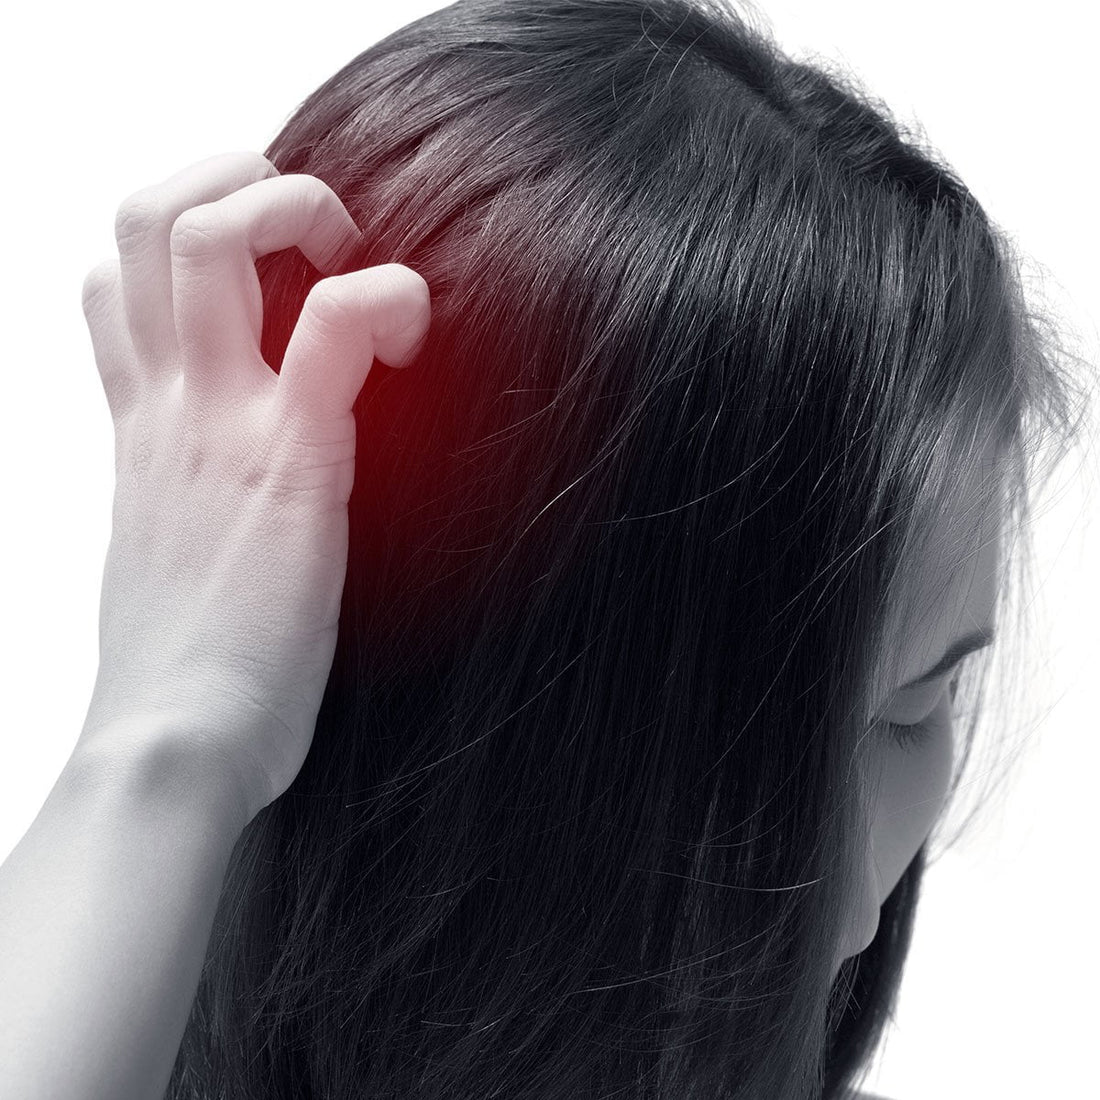 scalp pain causes